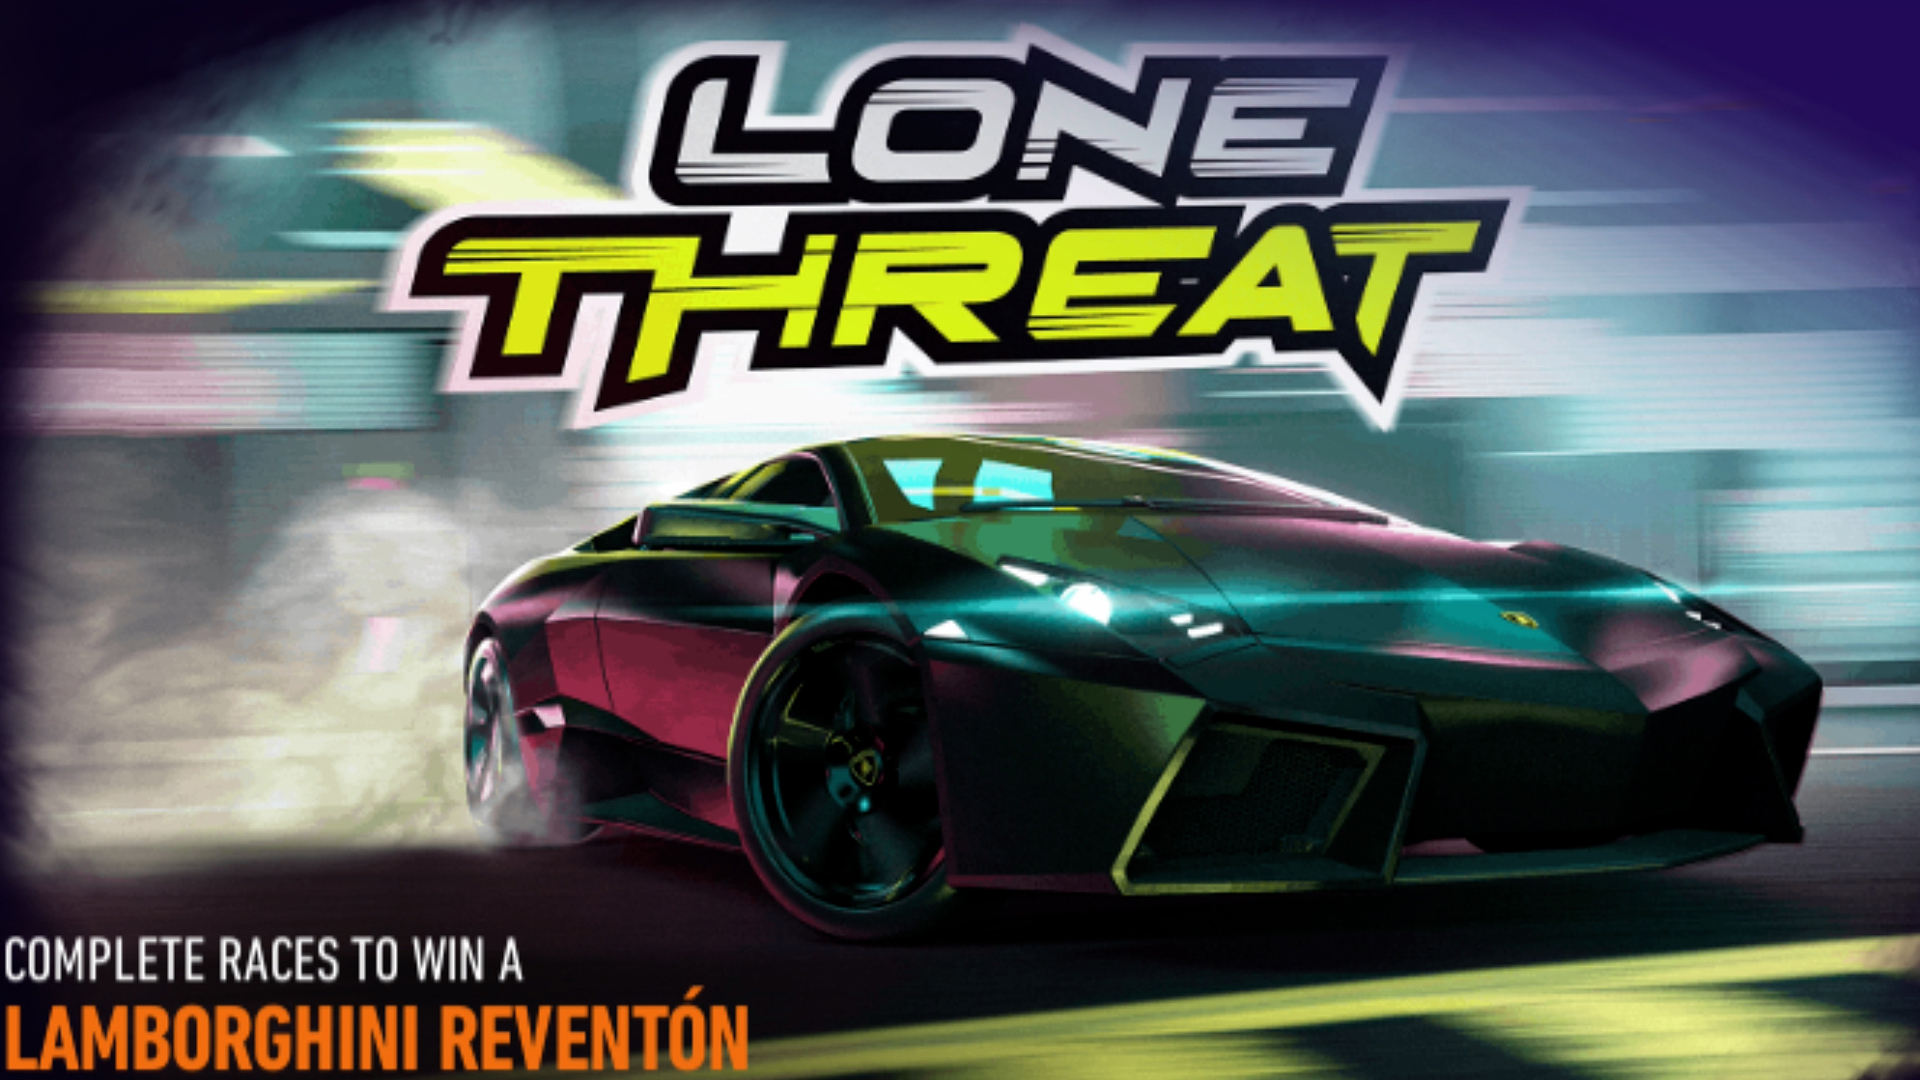 Lamborghini Reventón Lone Threat NFS No Limits FULL EVENT